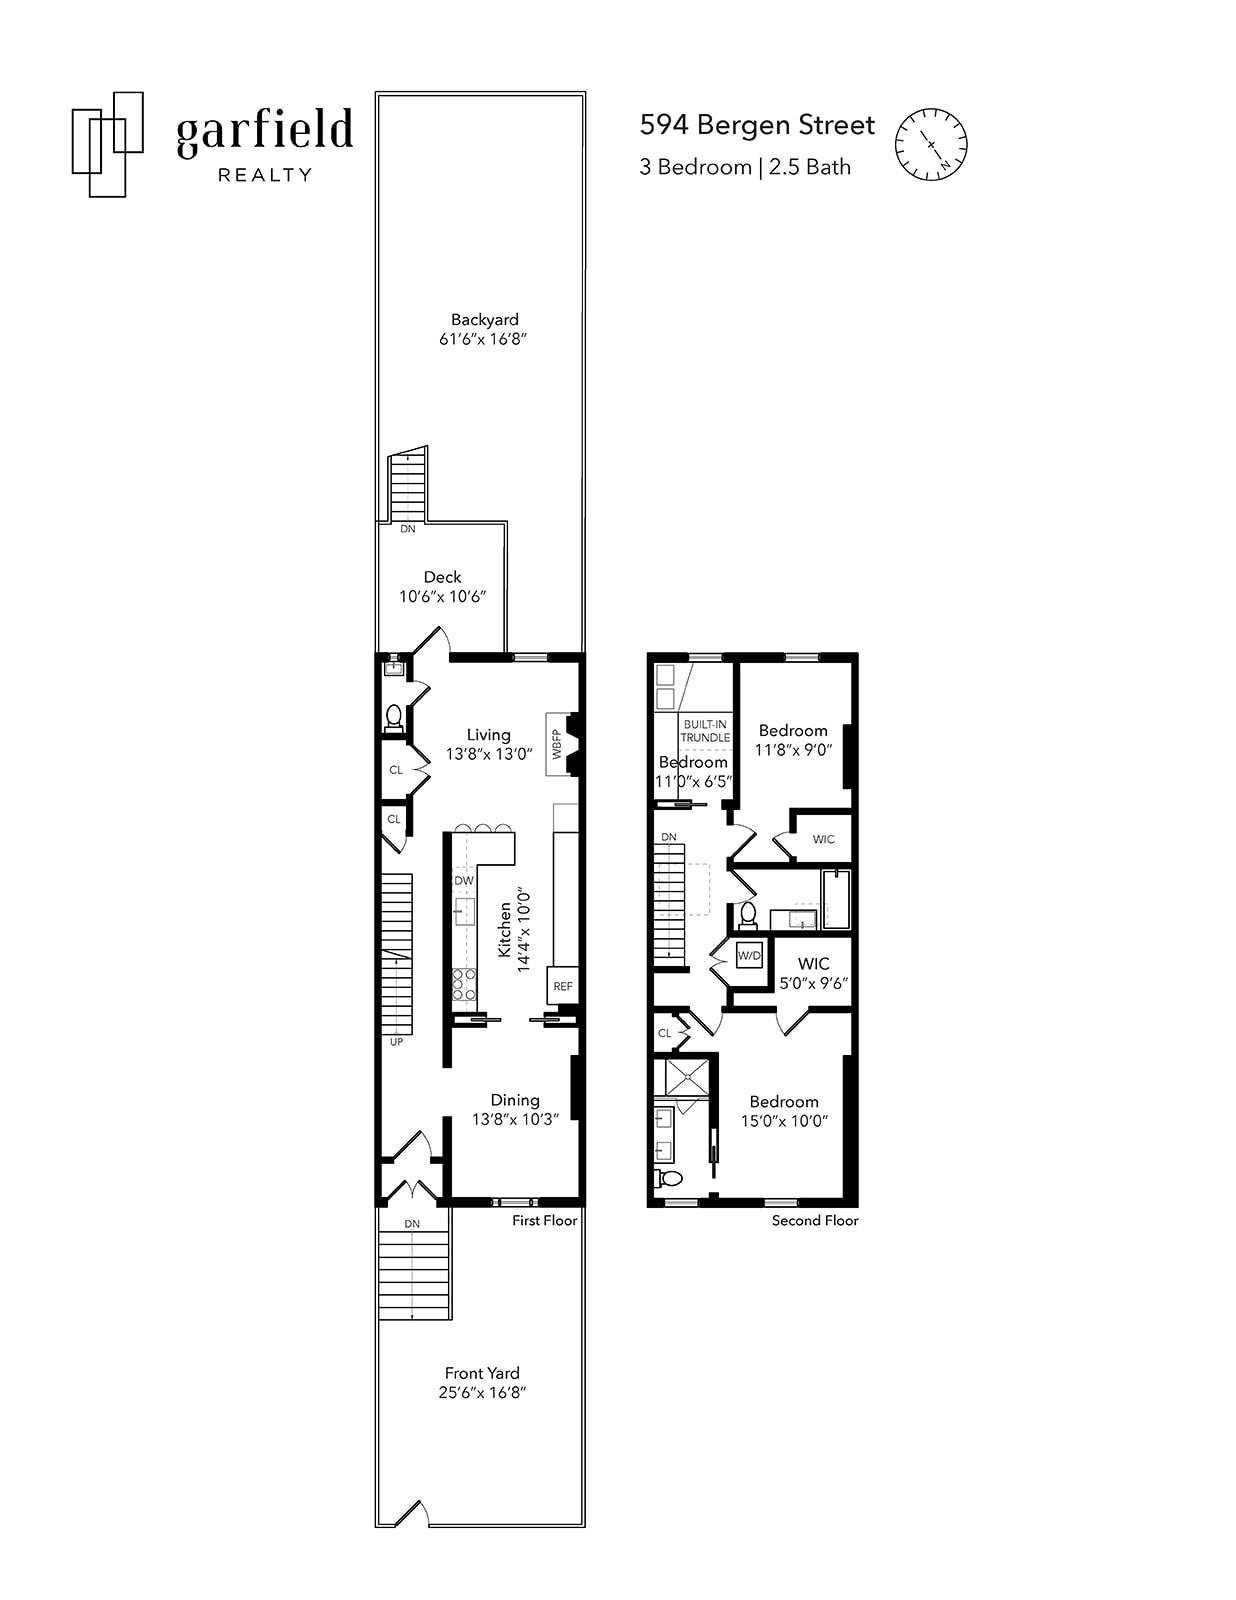 Floorplan of 594 Bergen St